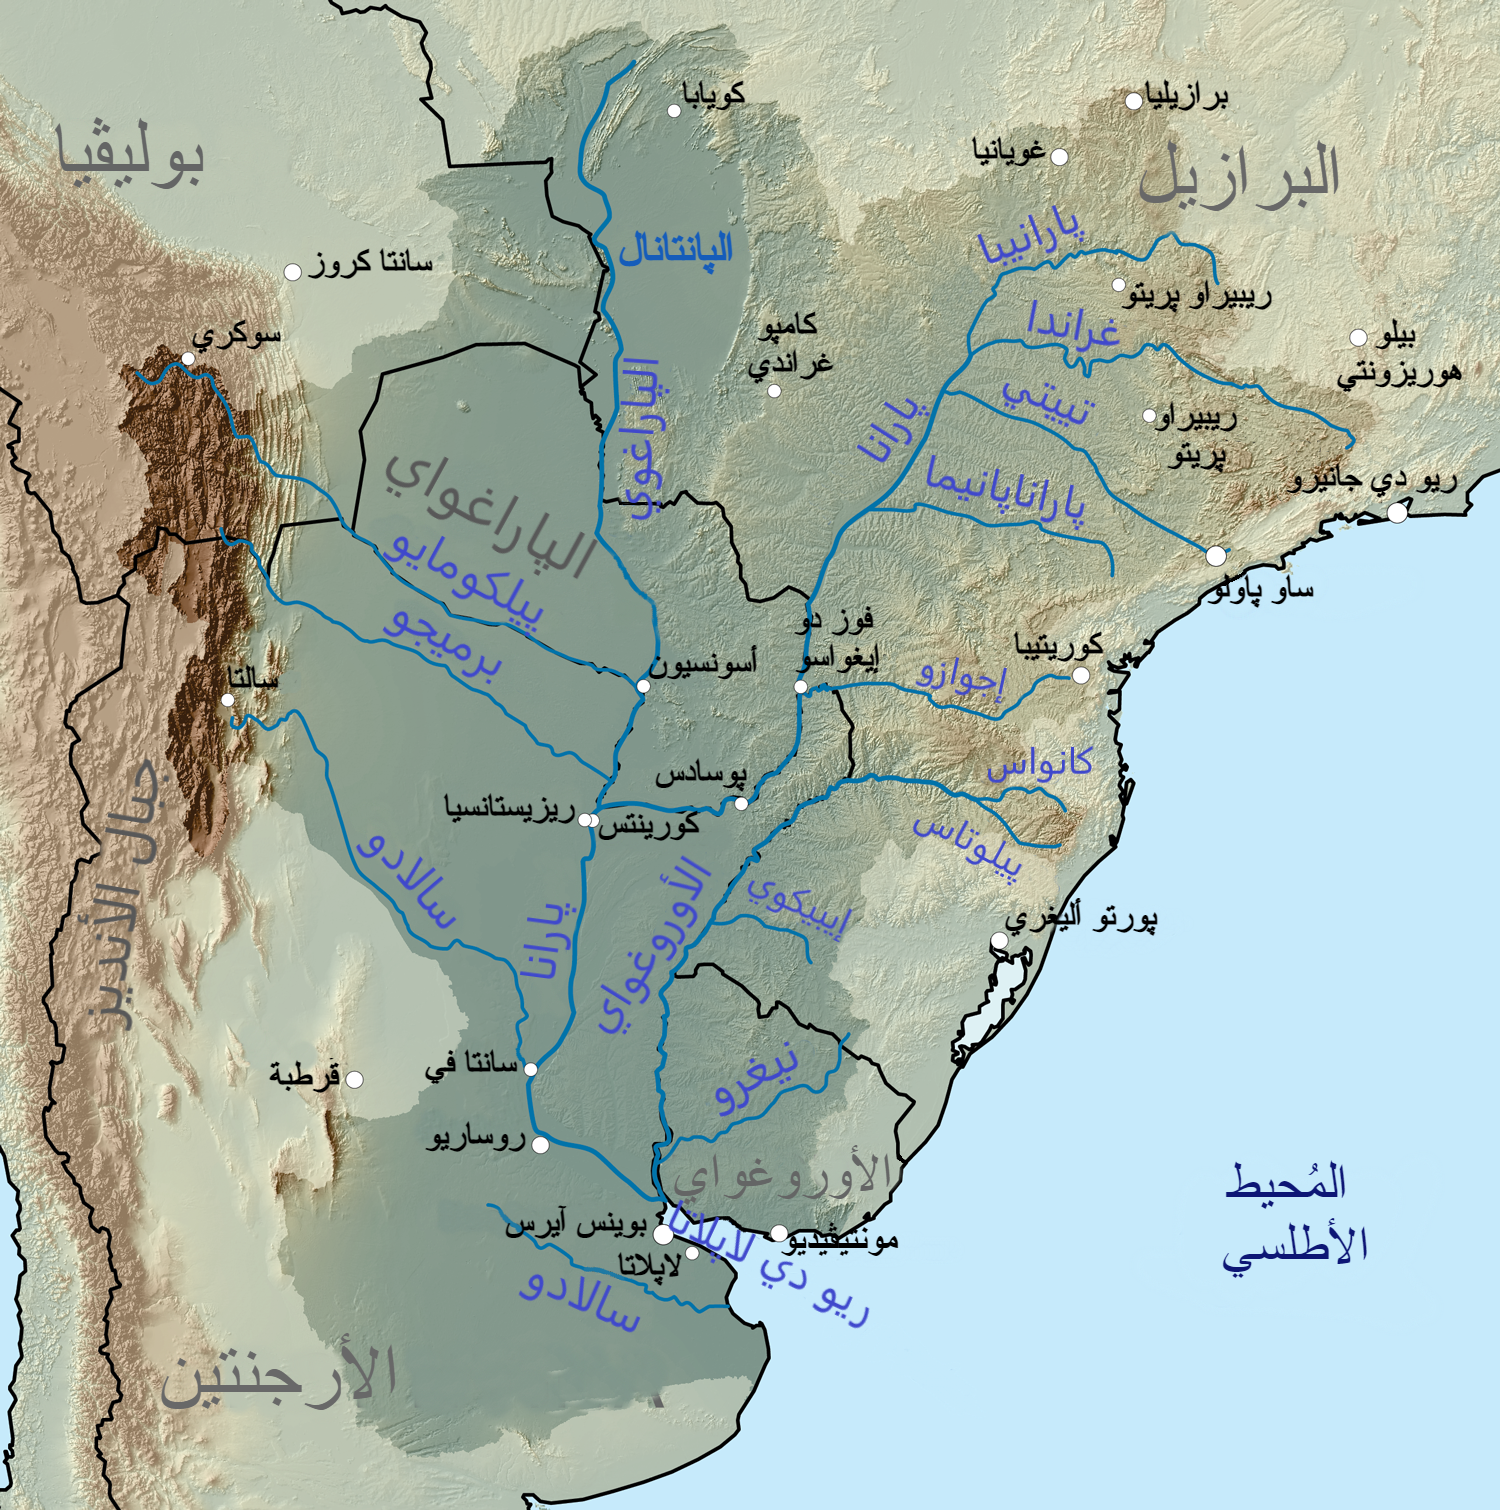 Рио гранде бассейн какого океана. Бассейн реки Парана на карте. Бассейн реки Парана. Исток реки Парана в Южной Америке на карте. Река ла-плата на карте Южной Америки.